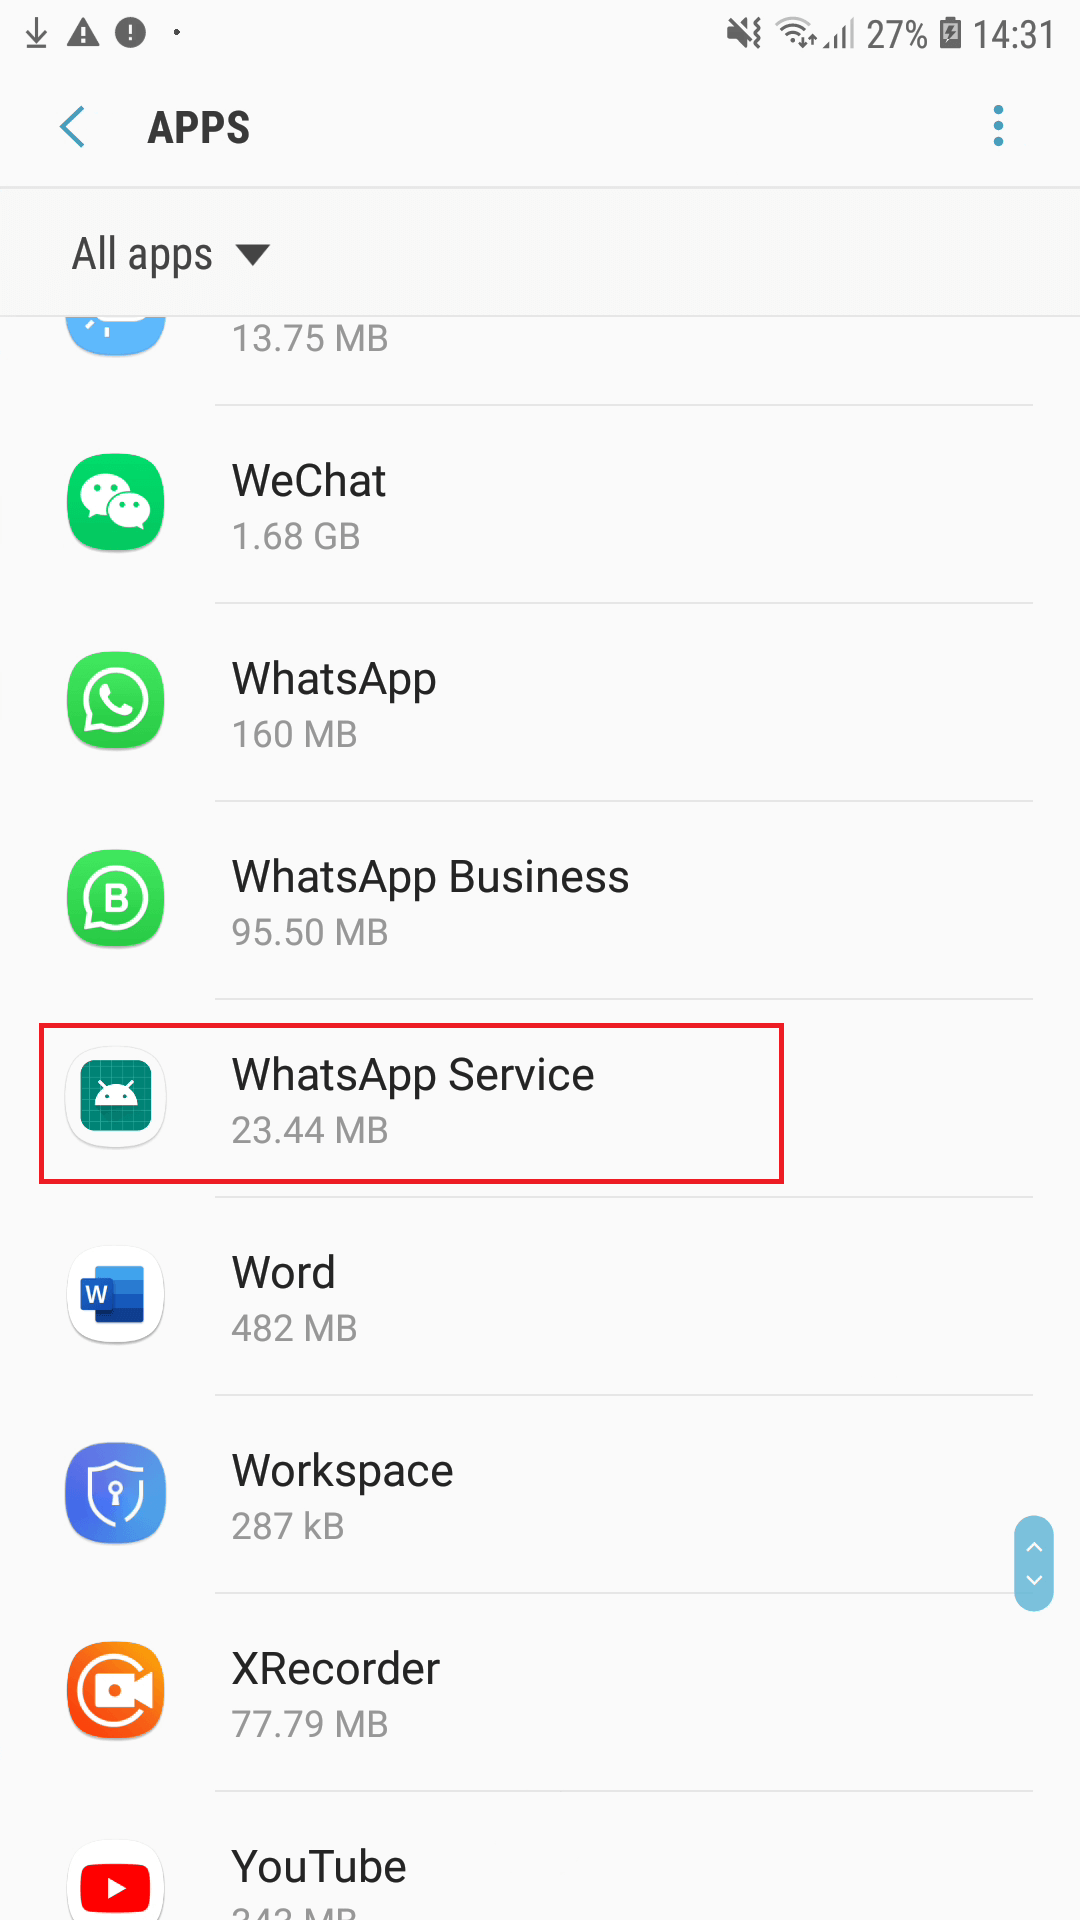 whatsapp service